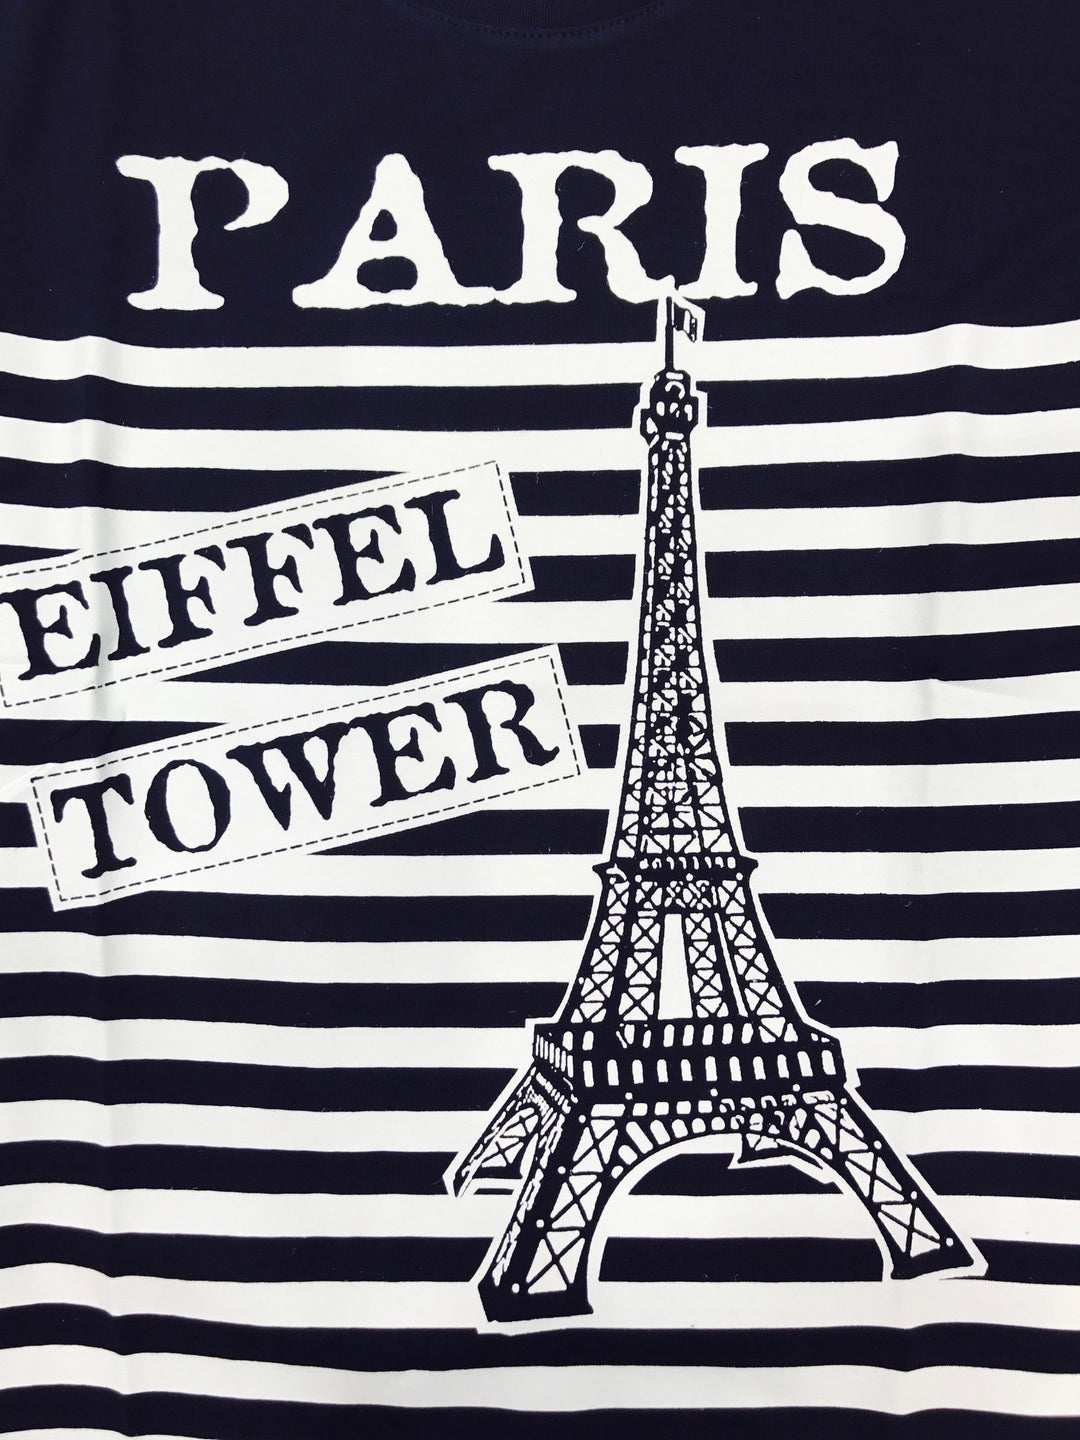 Tee shirt Tour Eiffel Paris marine